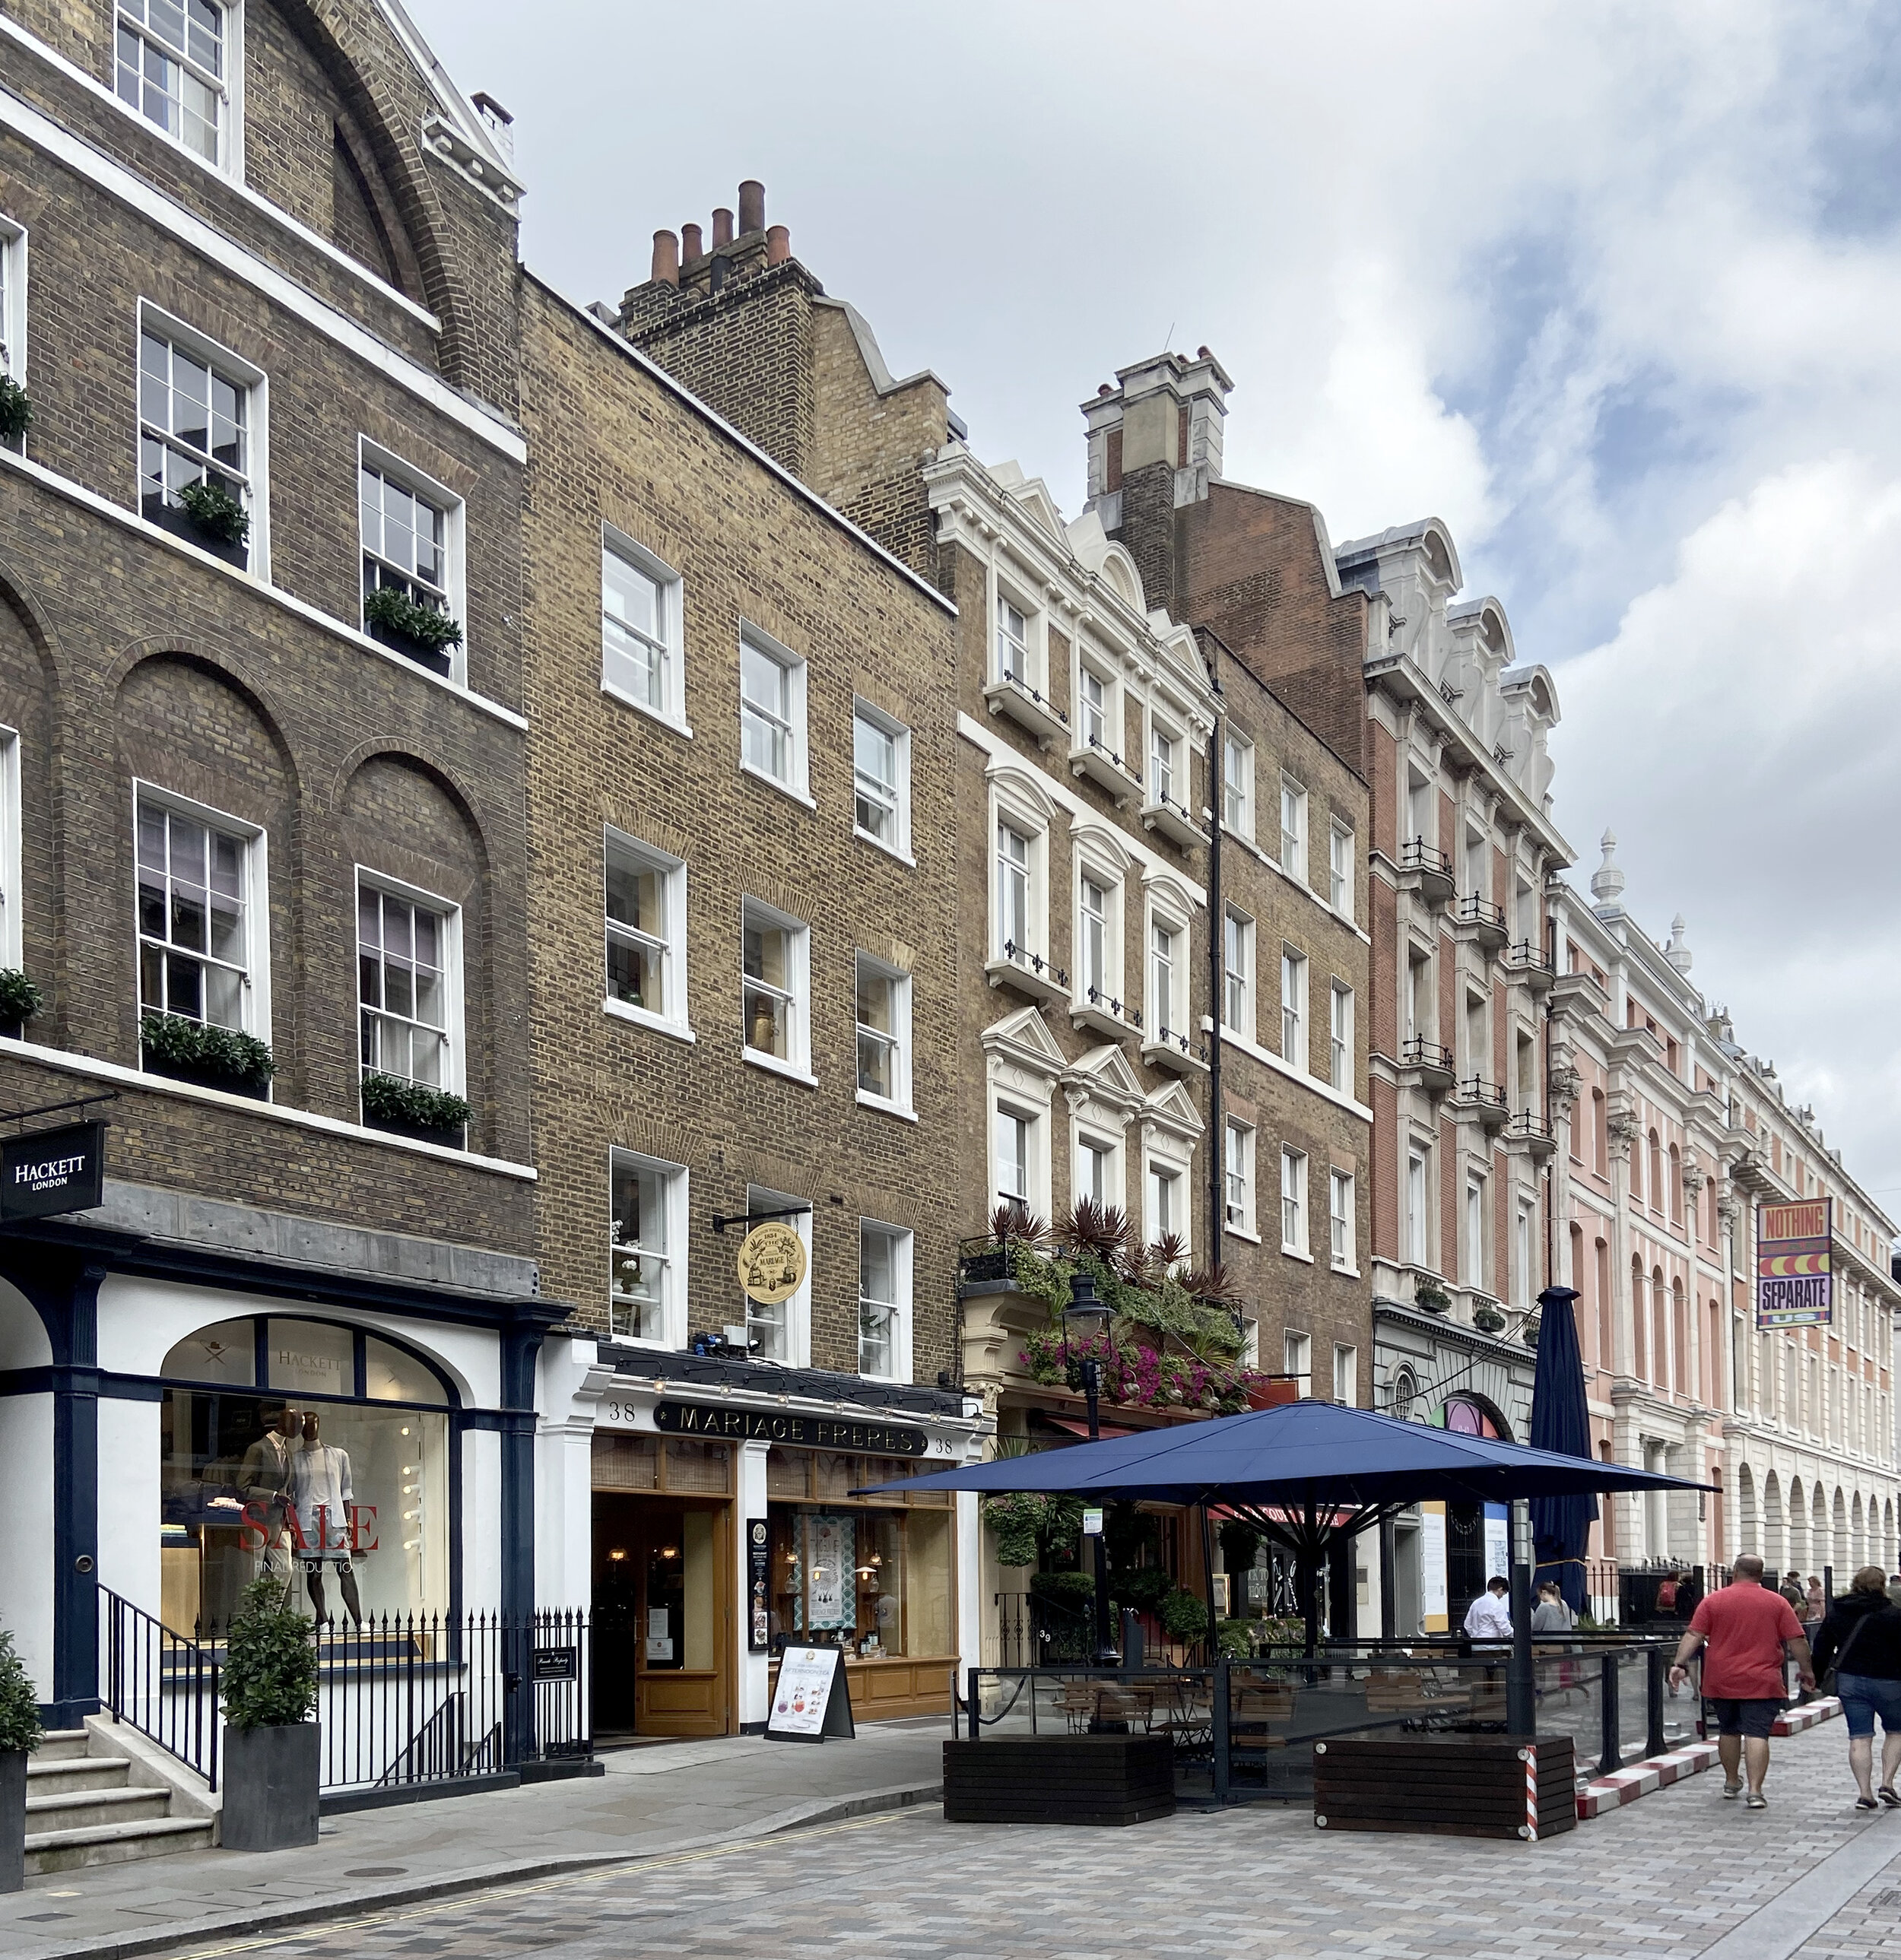 Mariage Frères, Covent Garden, London — Fletcher Crane Architects